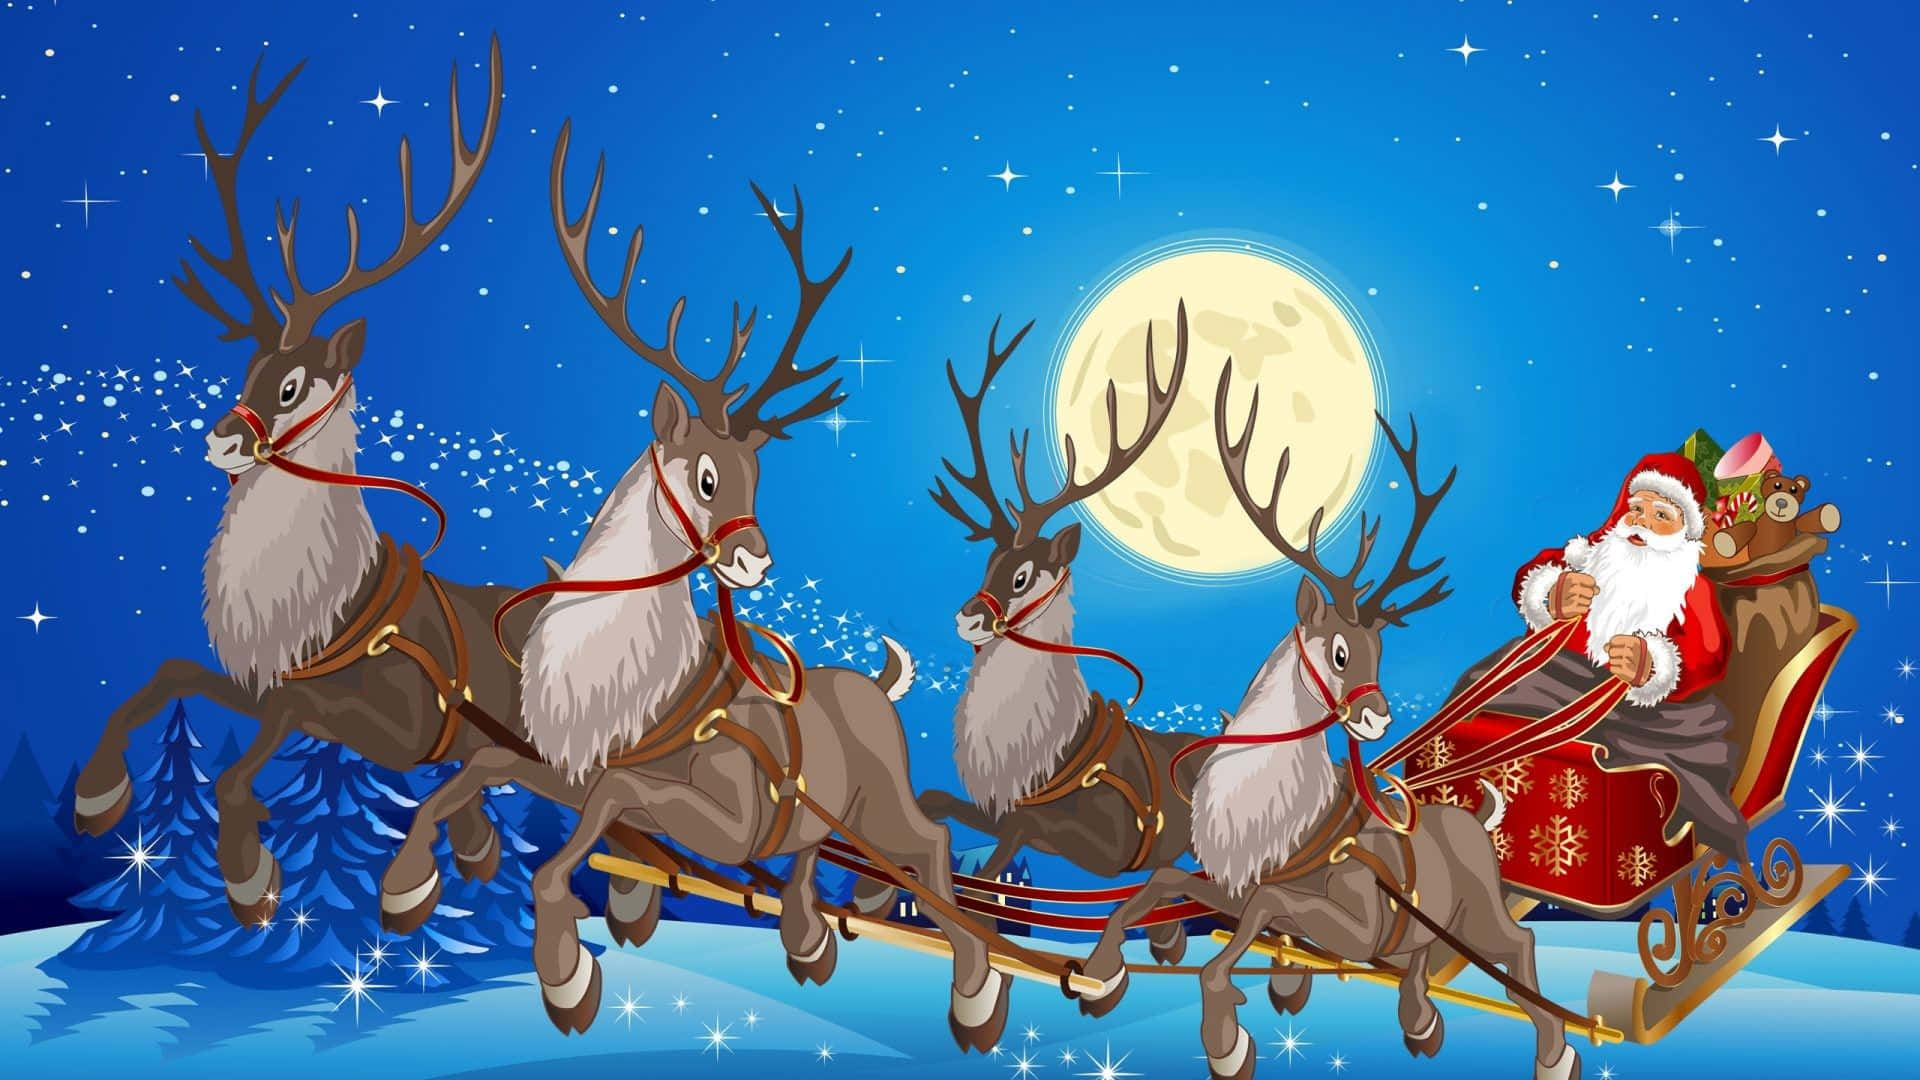 Santa Claus happily riding his sleigh through the snowy night sky